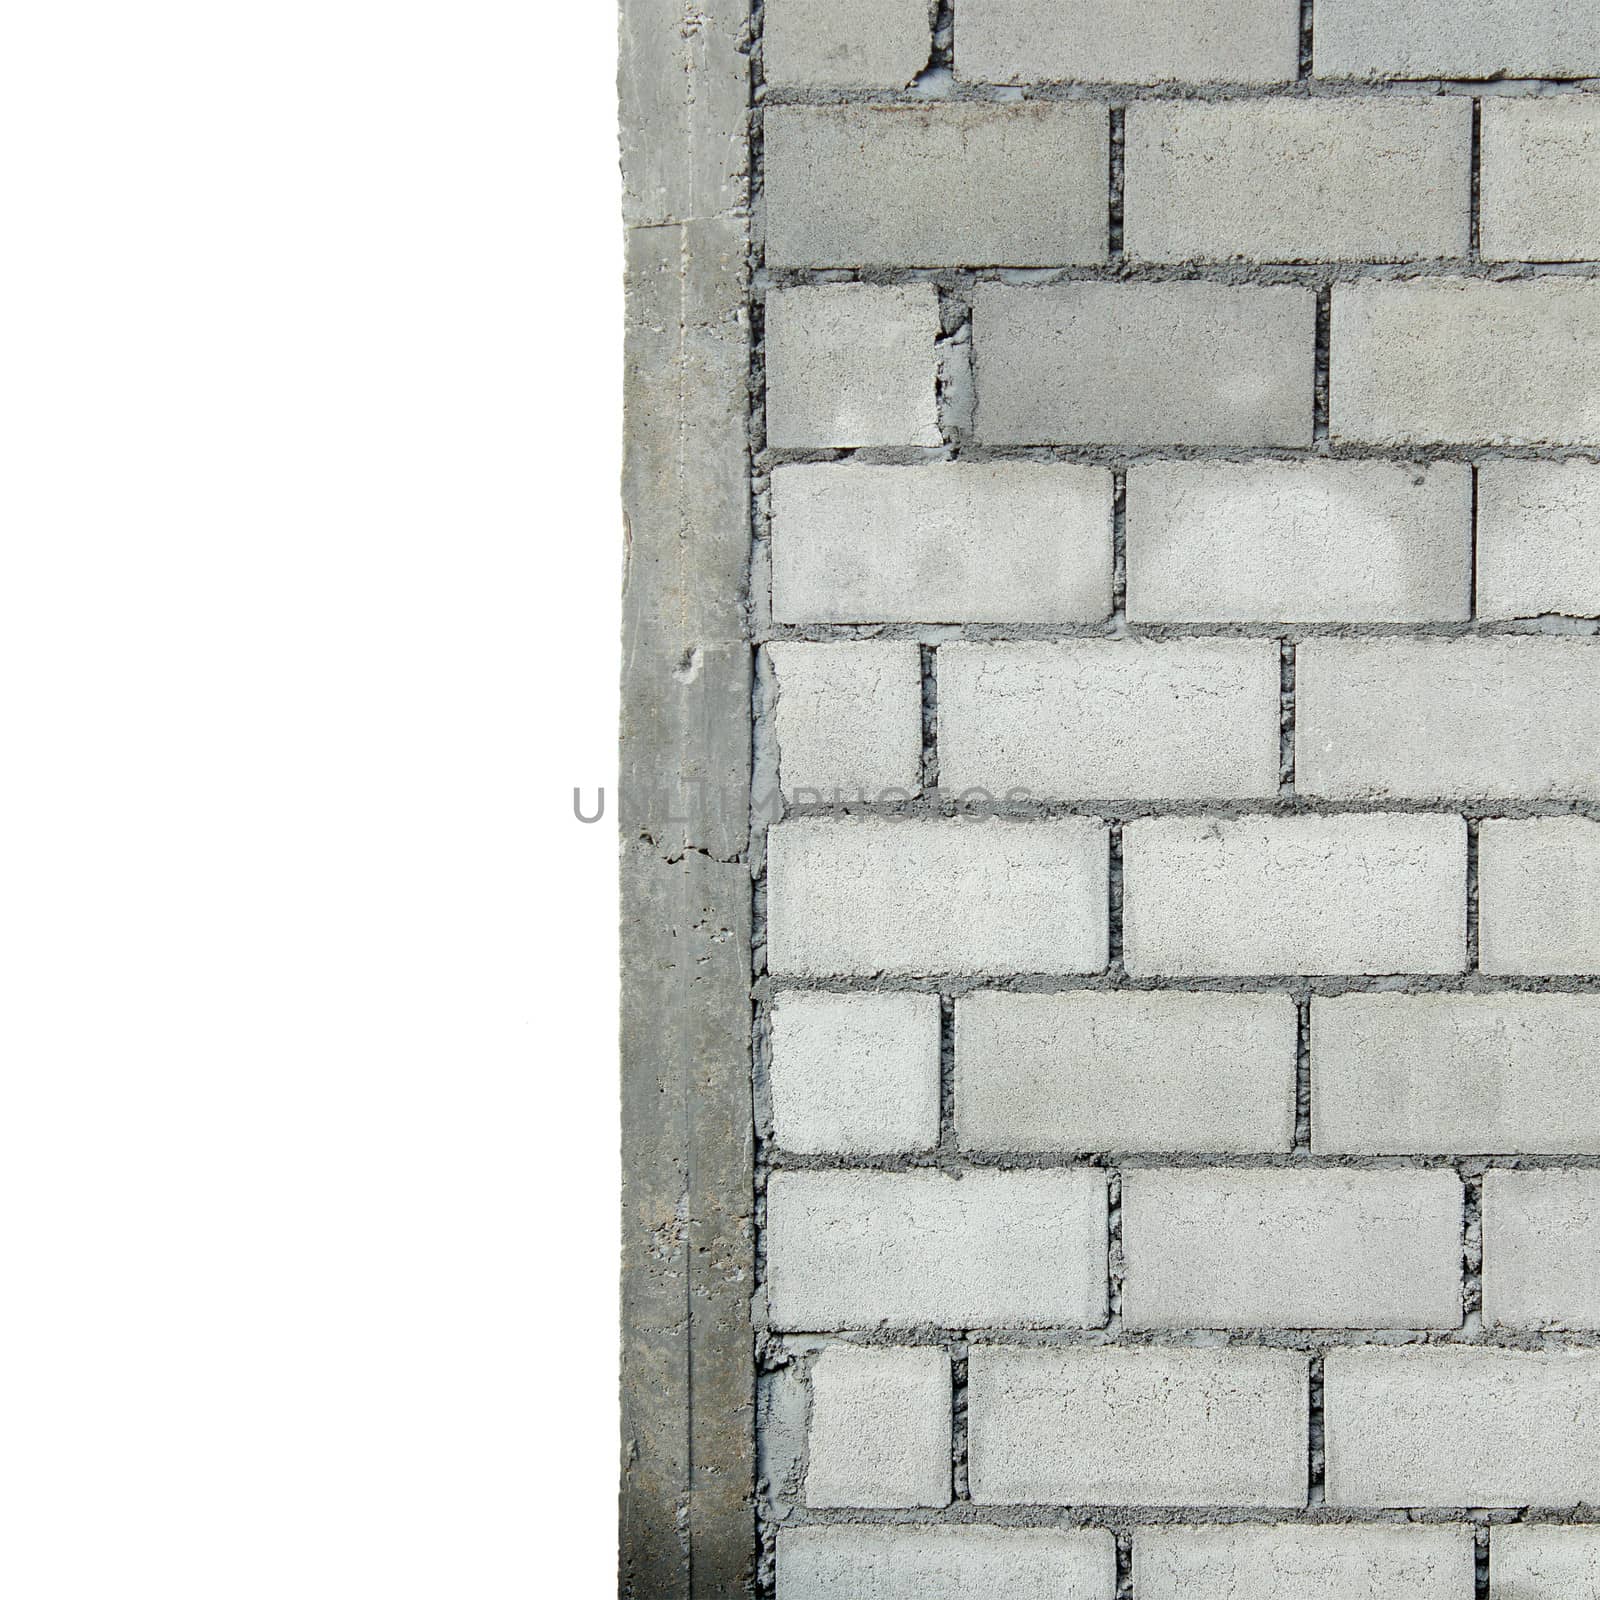 White Brick Wall Pattern by foto76